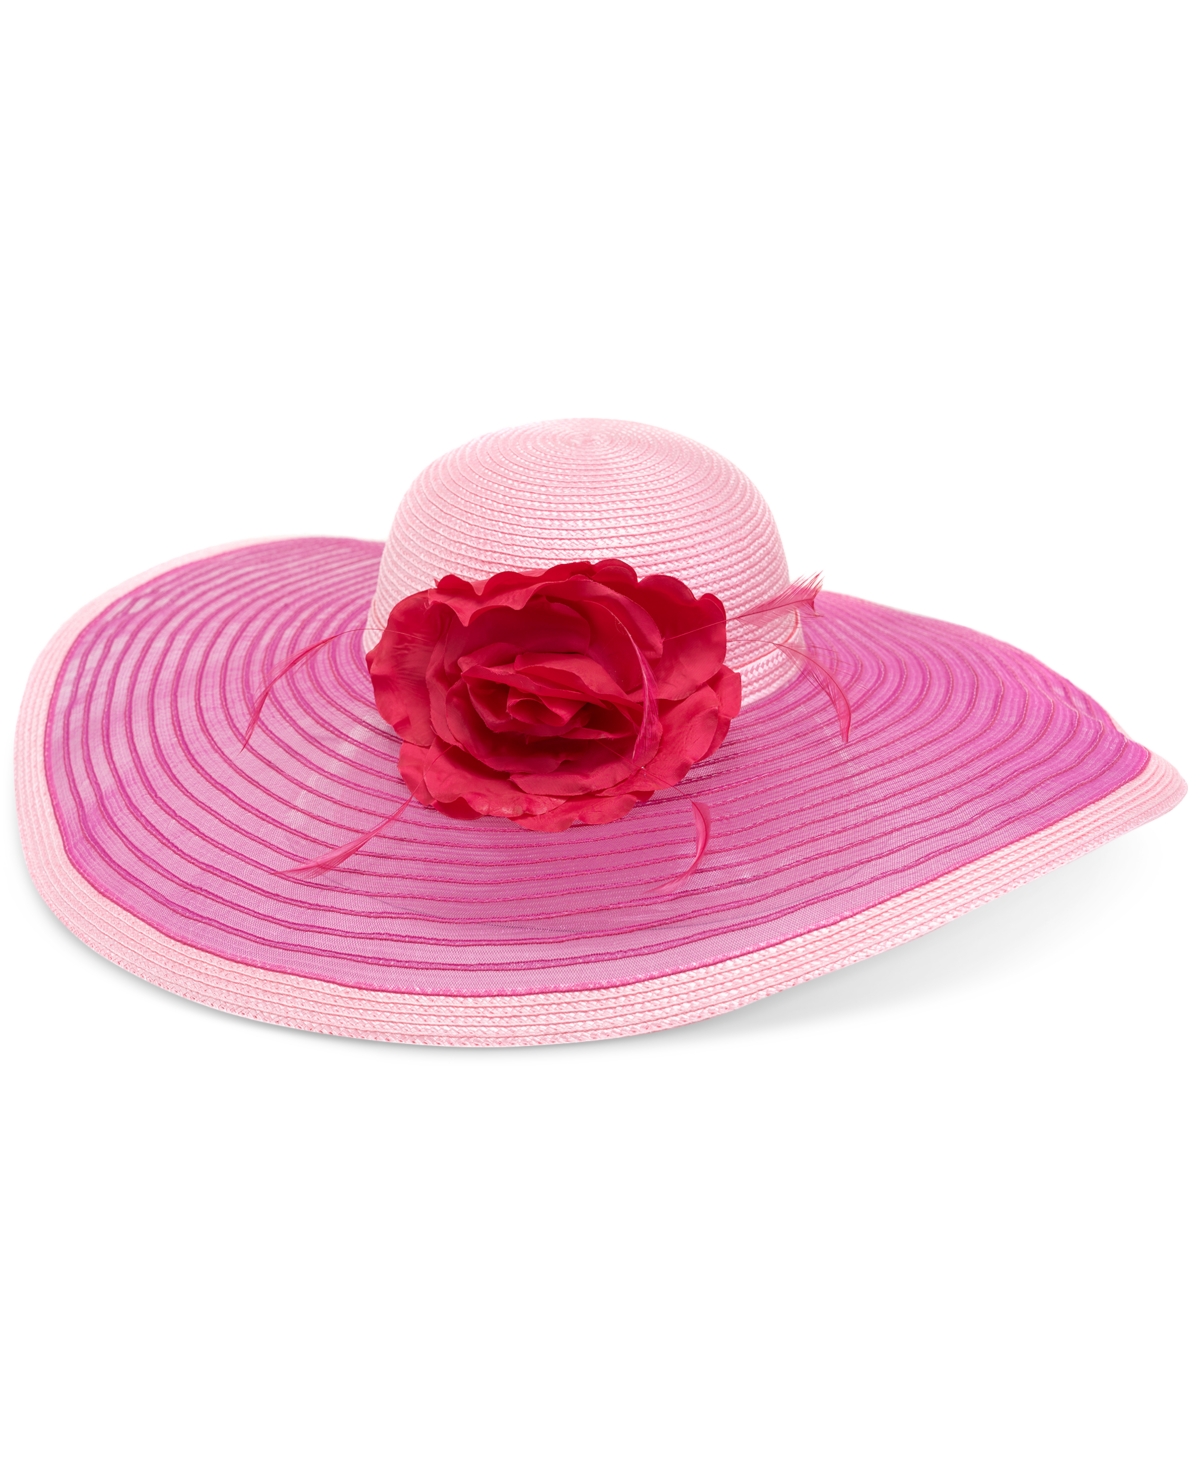 Women's Large-Flower Wide-Brim Dressy Hat - Pink